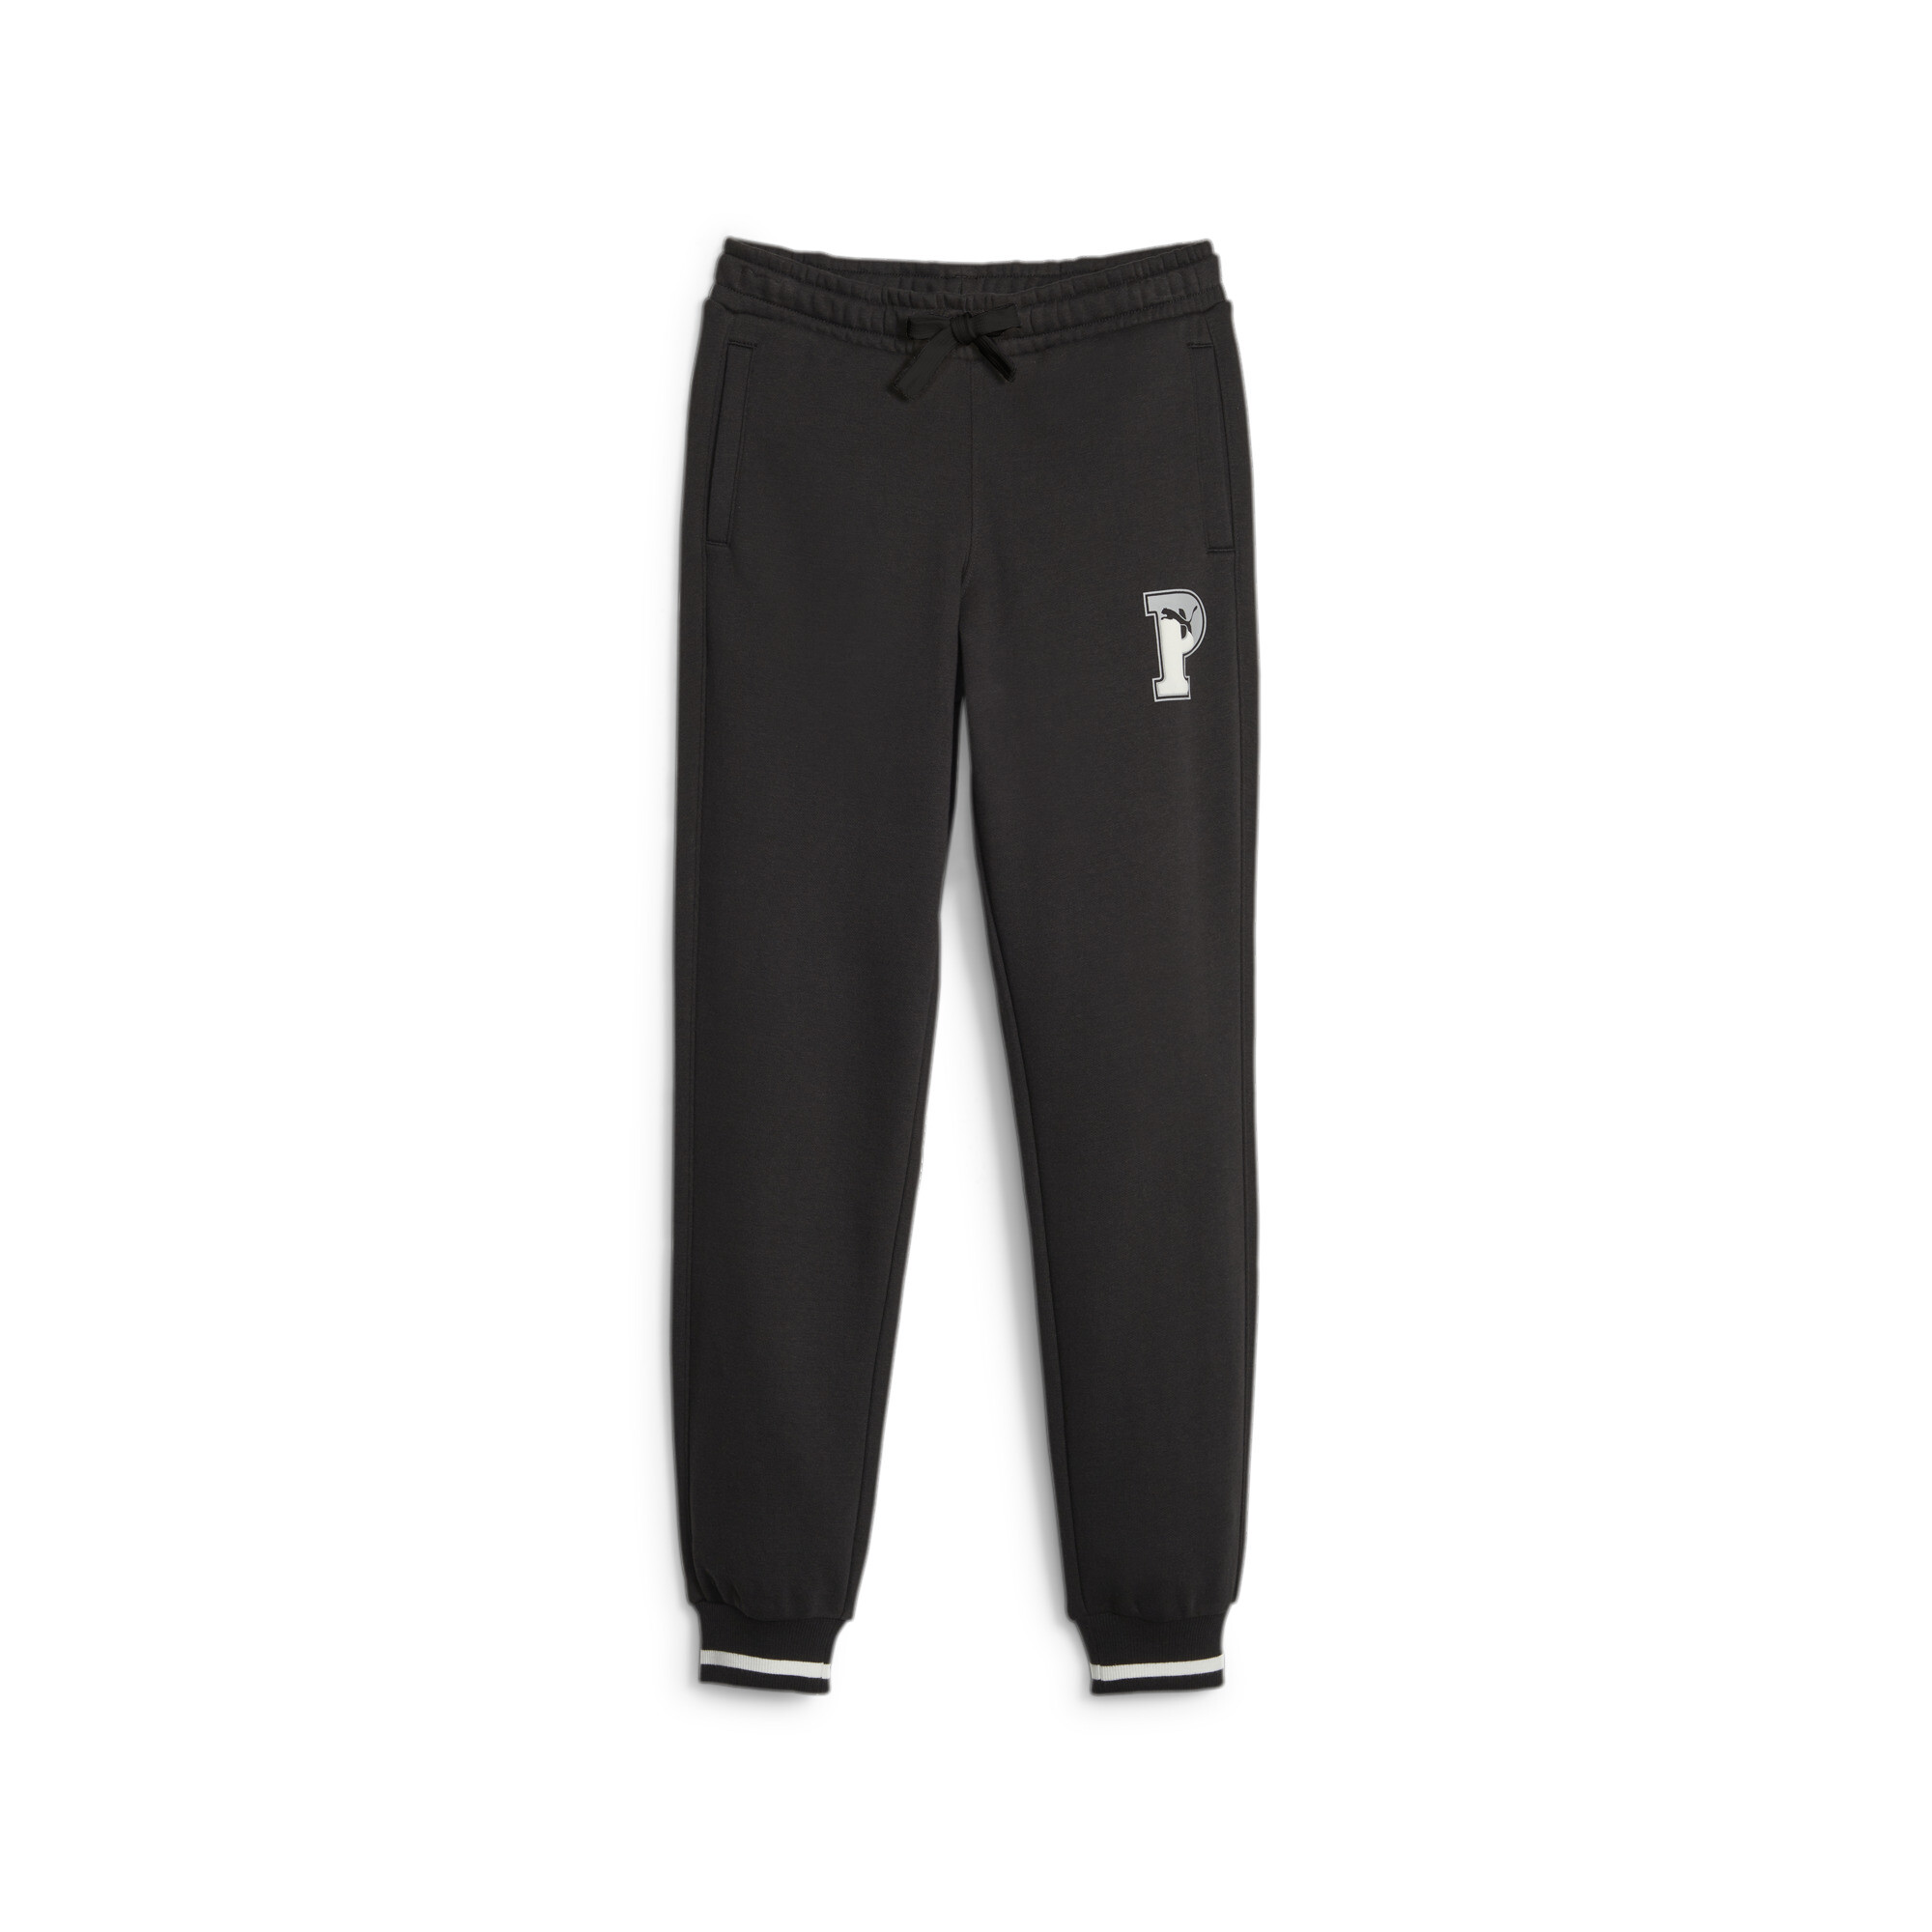 Women's Puma SQUAD Youth Sweatpants, Black, Size 11-12Y, Clothing